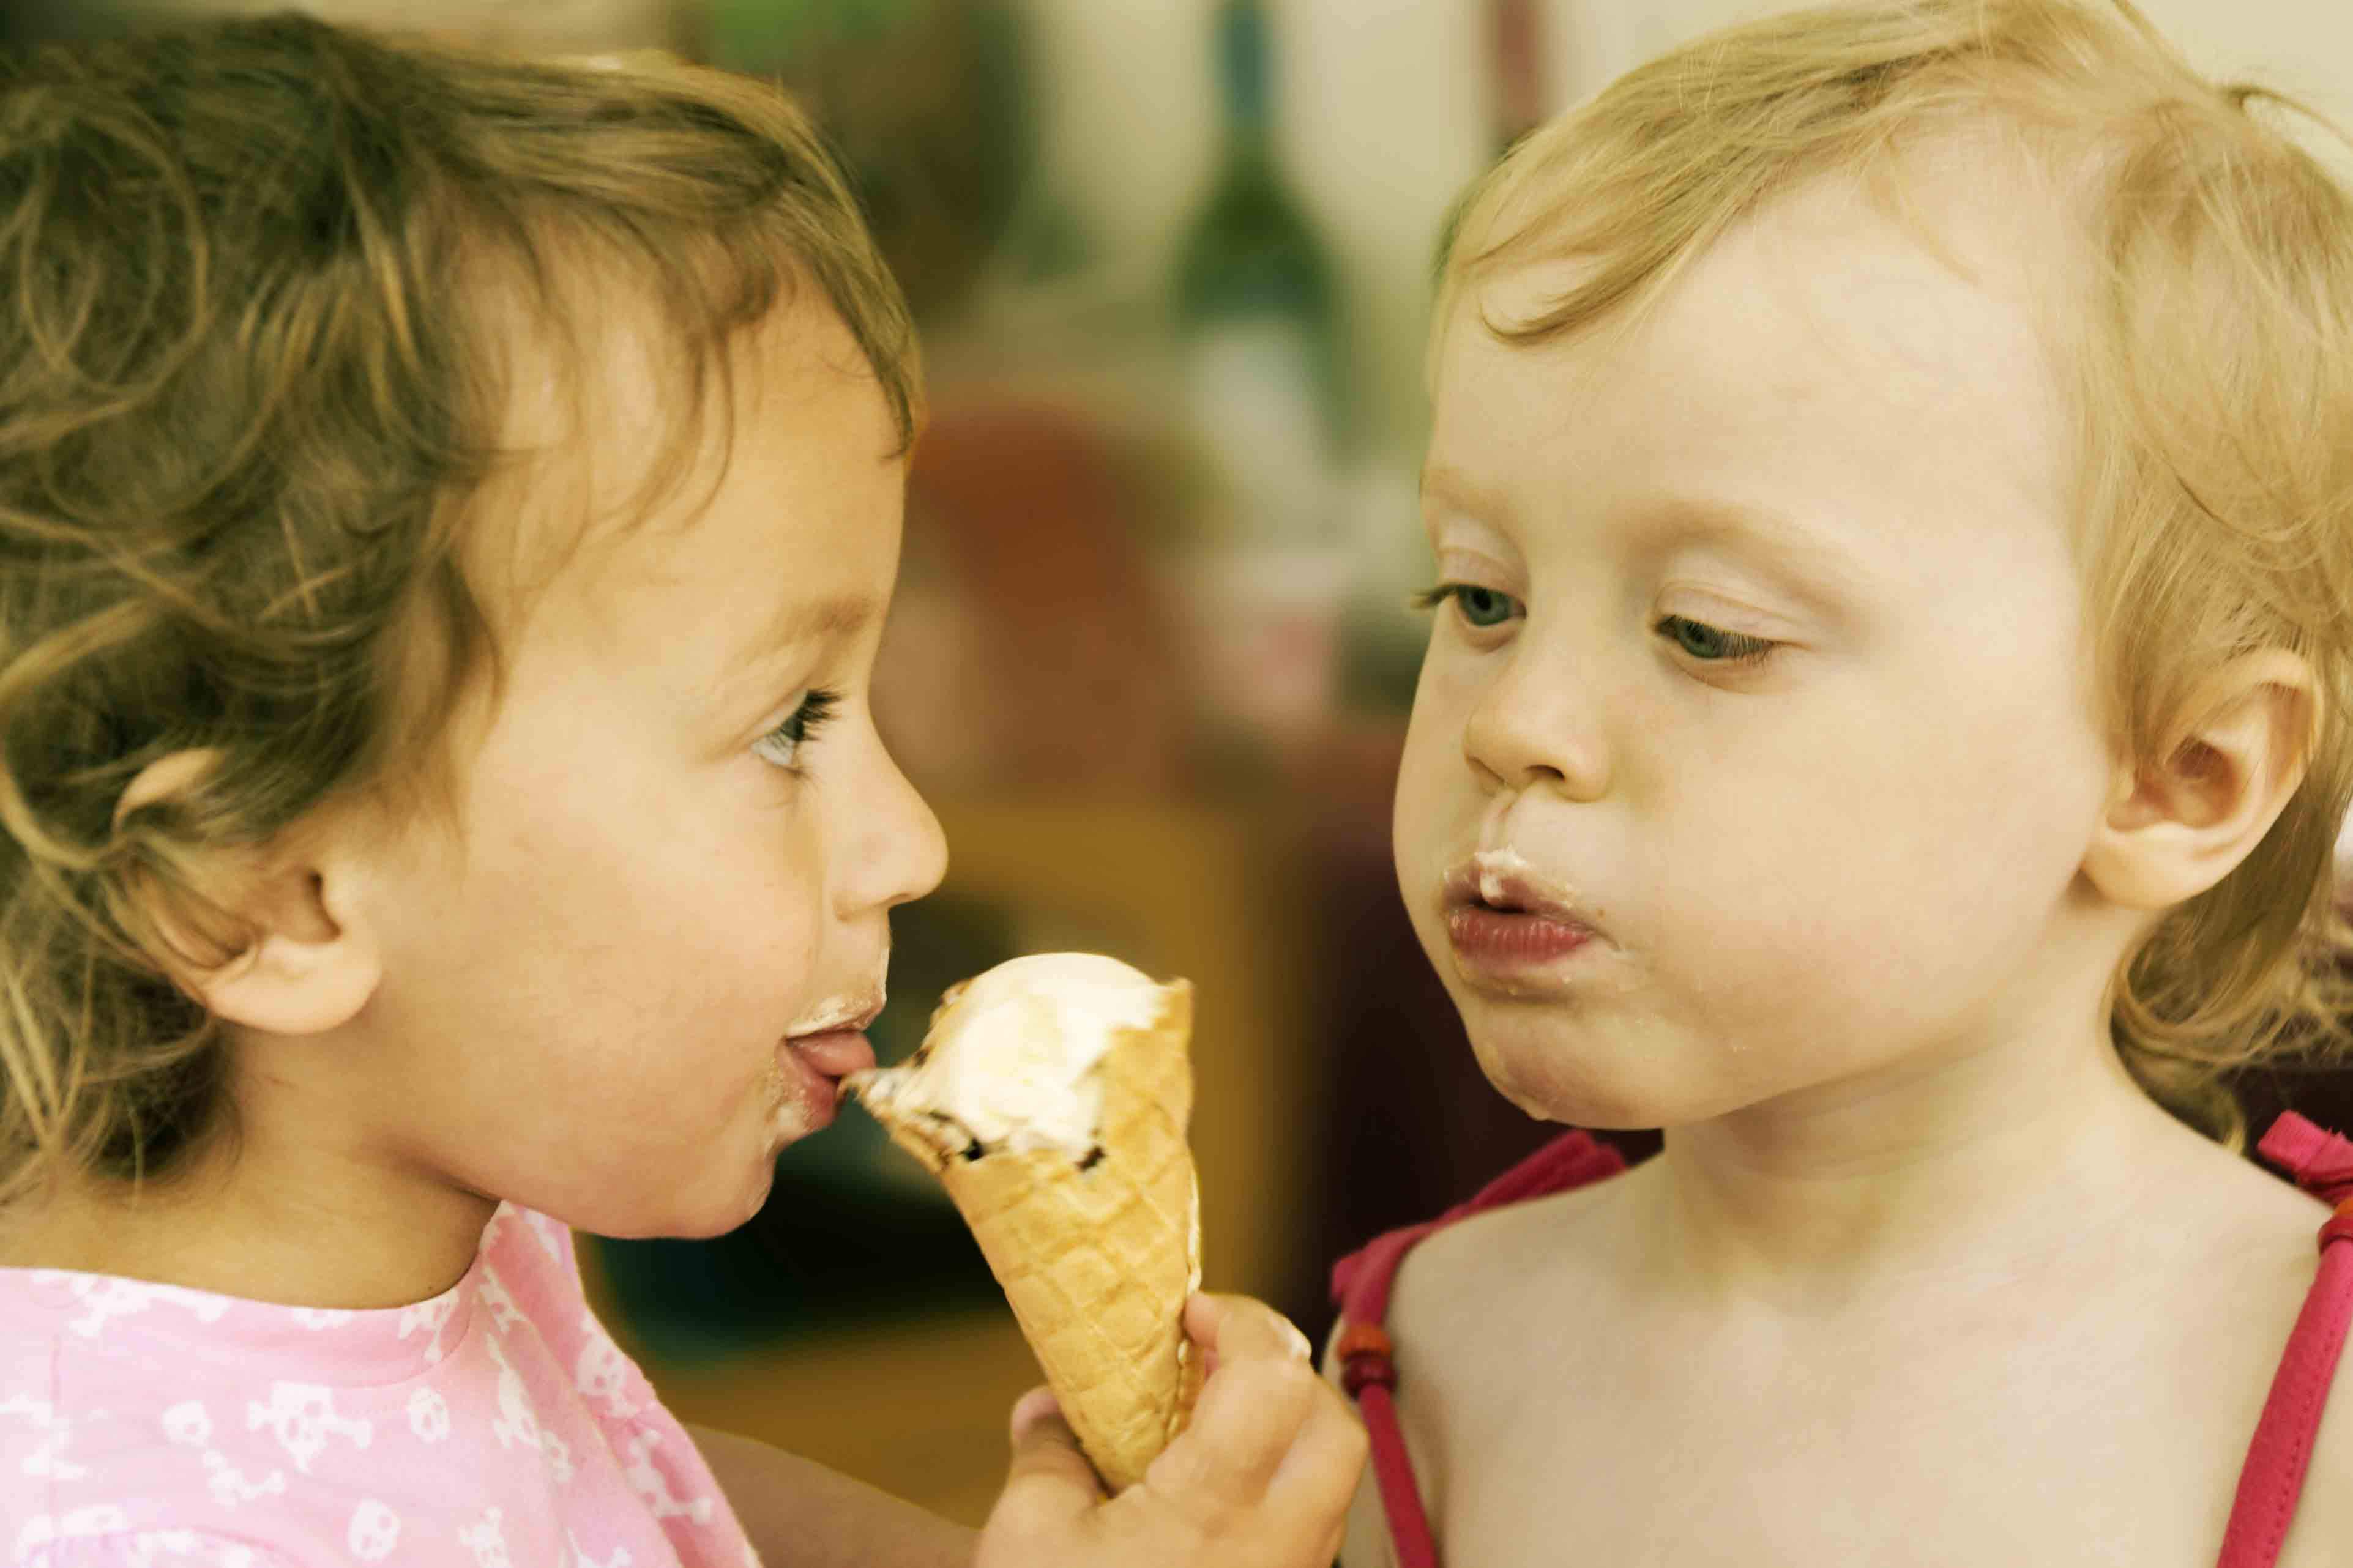 kids sharing an ice cream cone